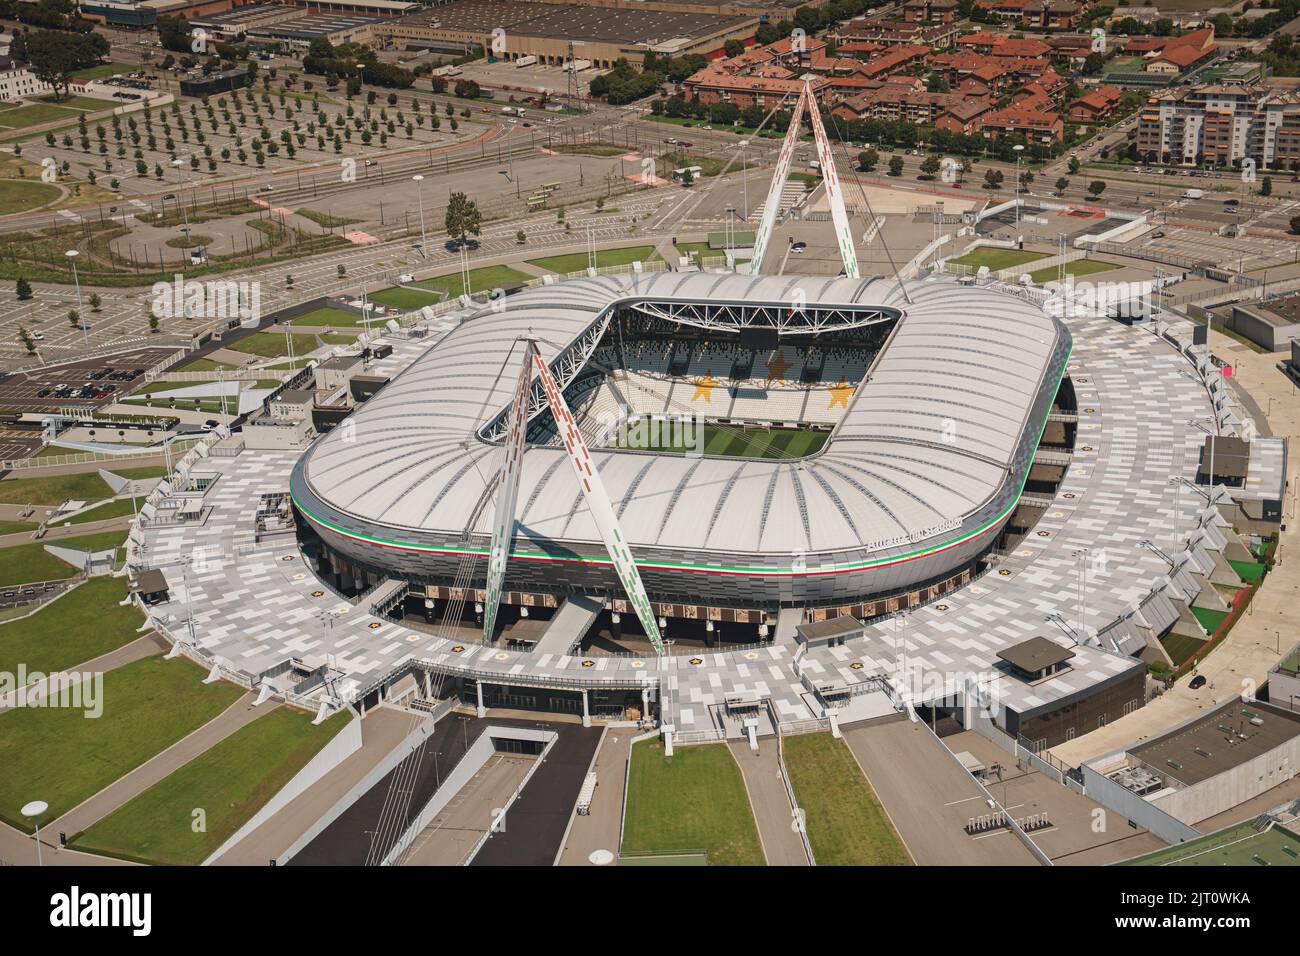 Vue aérienne du stade Juventus Allianz. Turin, Italie Banque D'Images